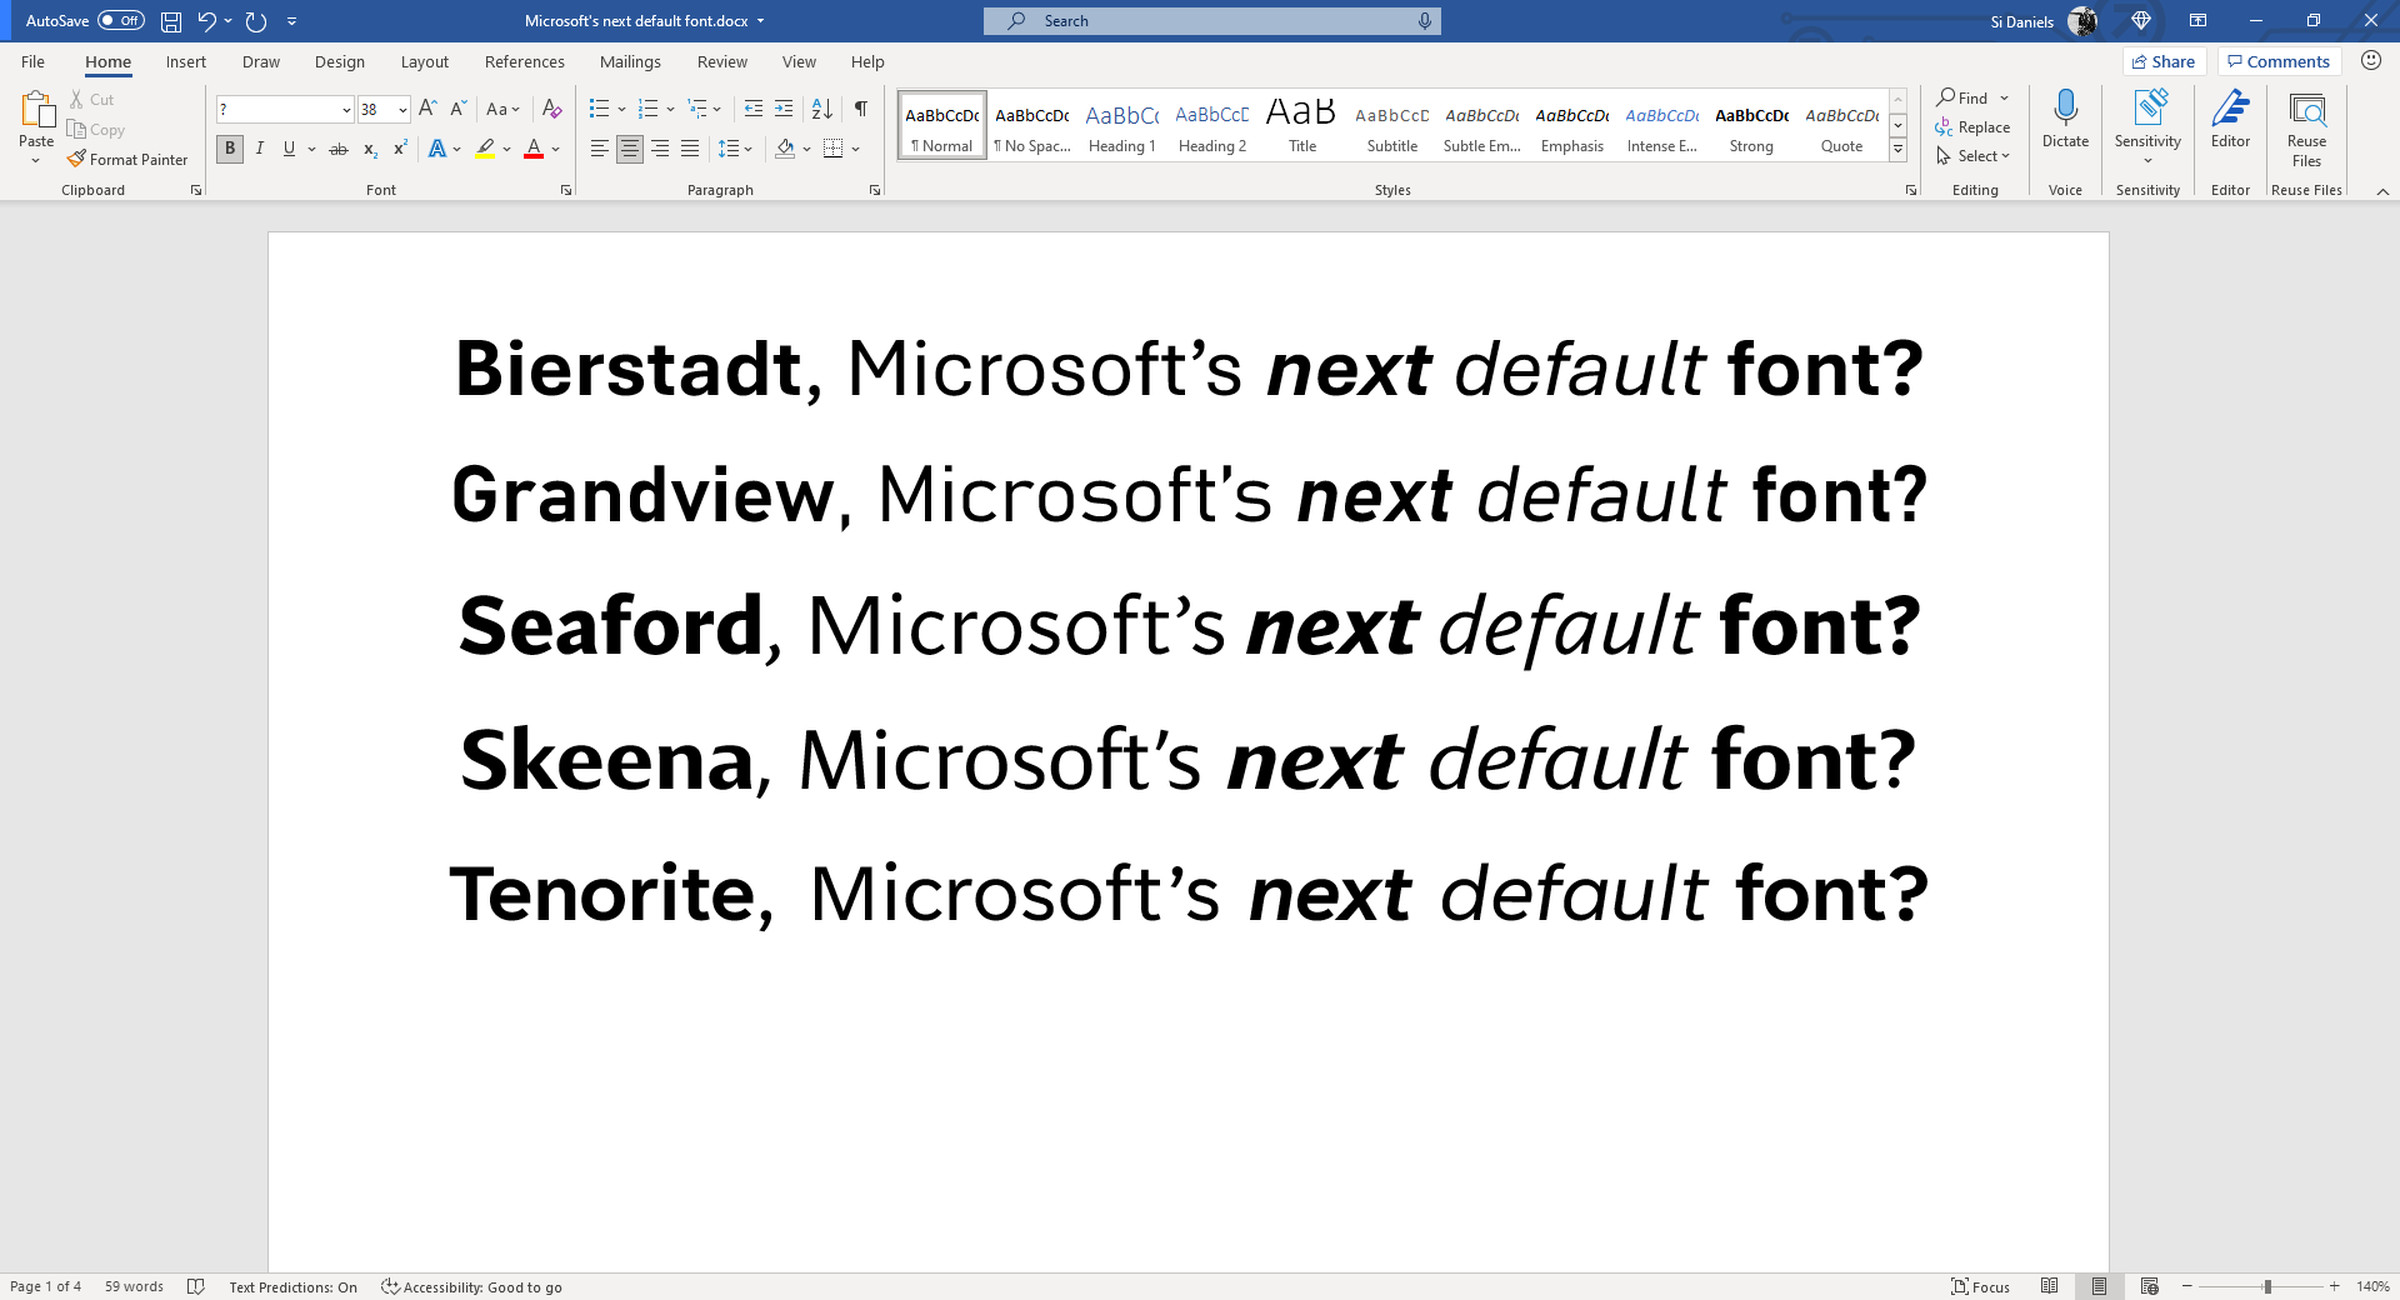 Microsoft’s new Office fonts.